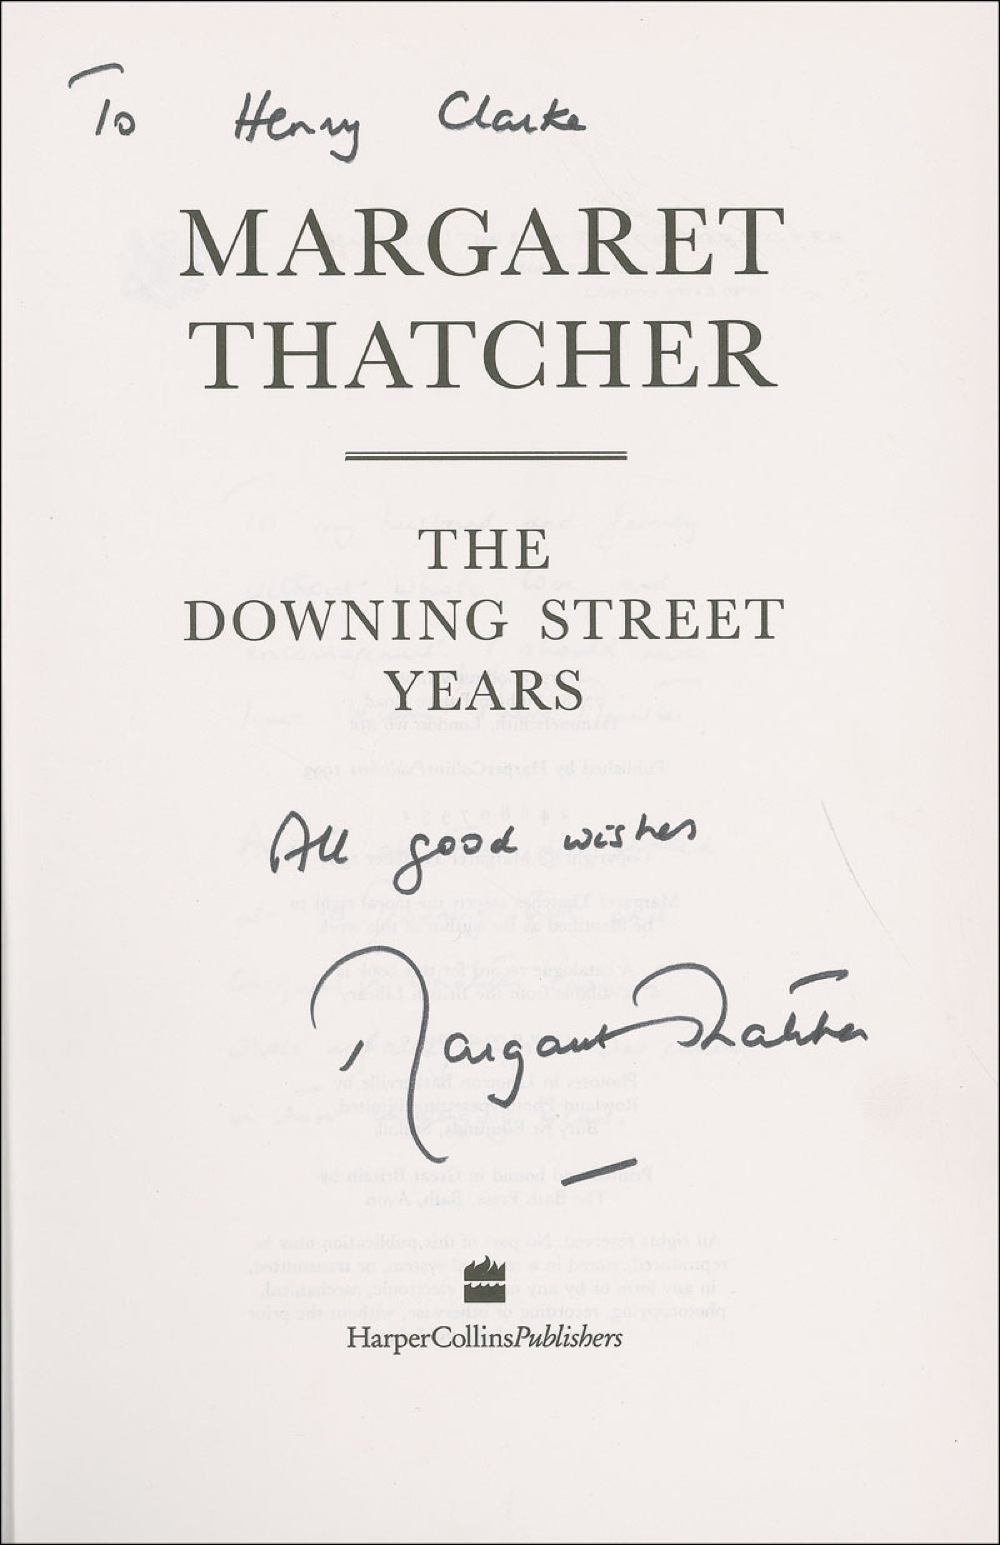 Lot #325 Margaret Thatcher